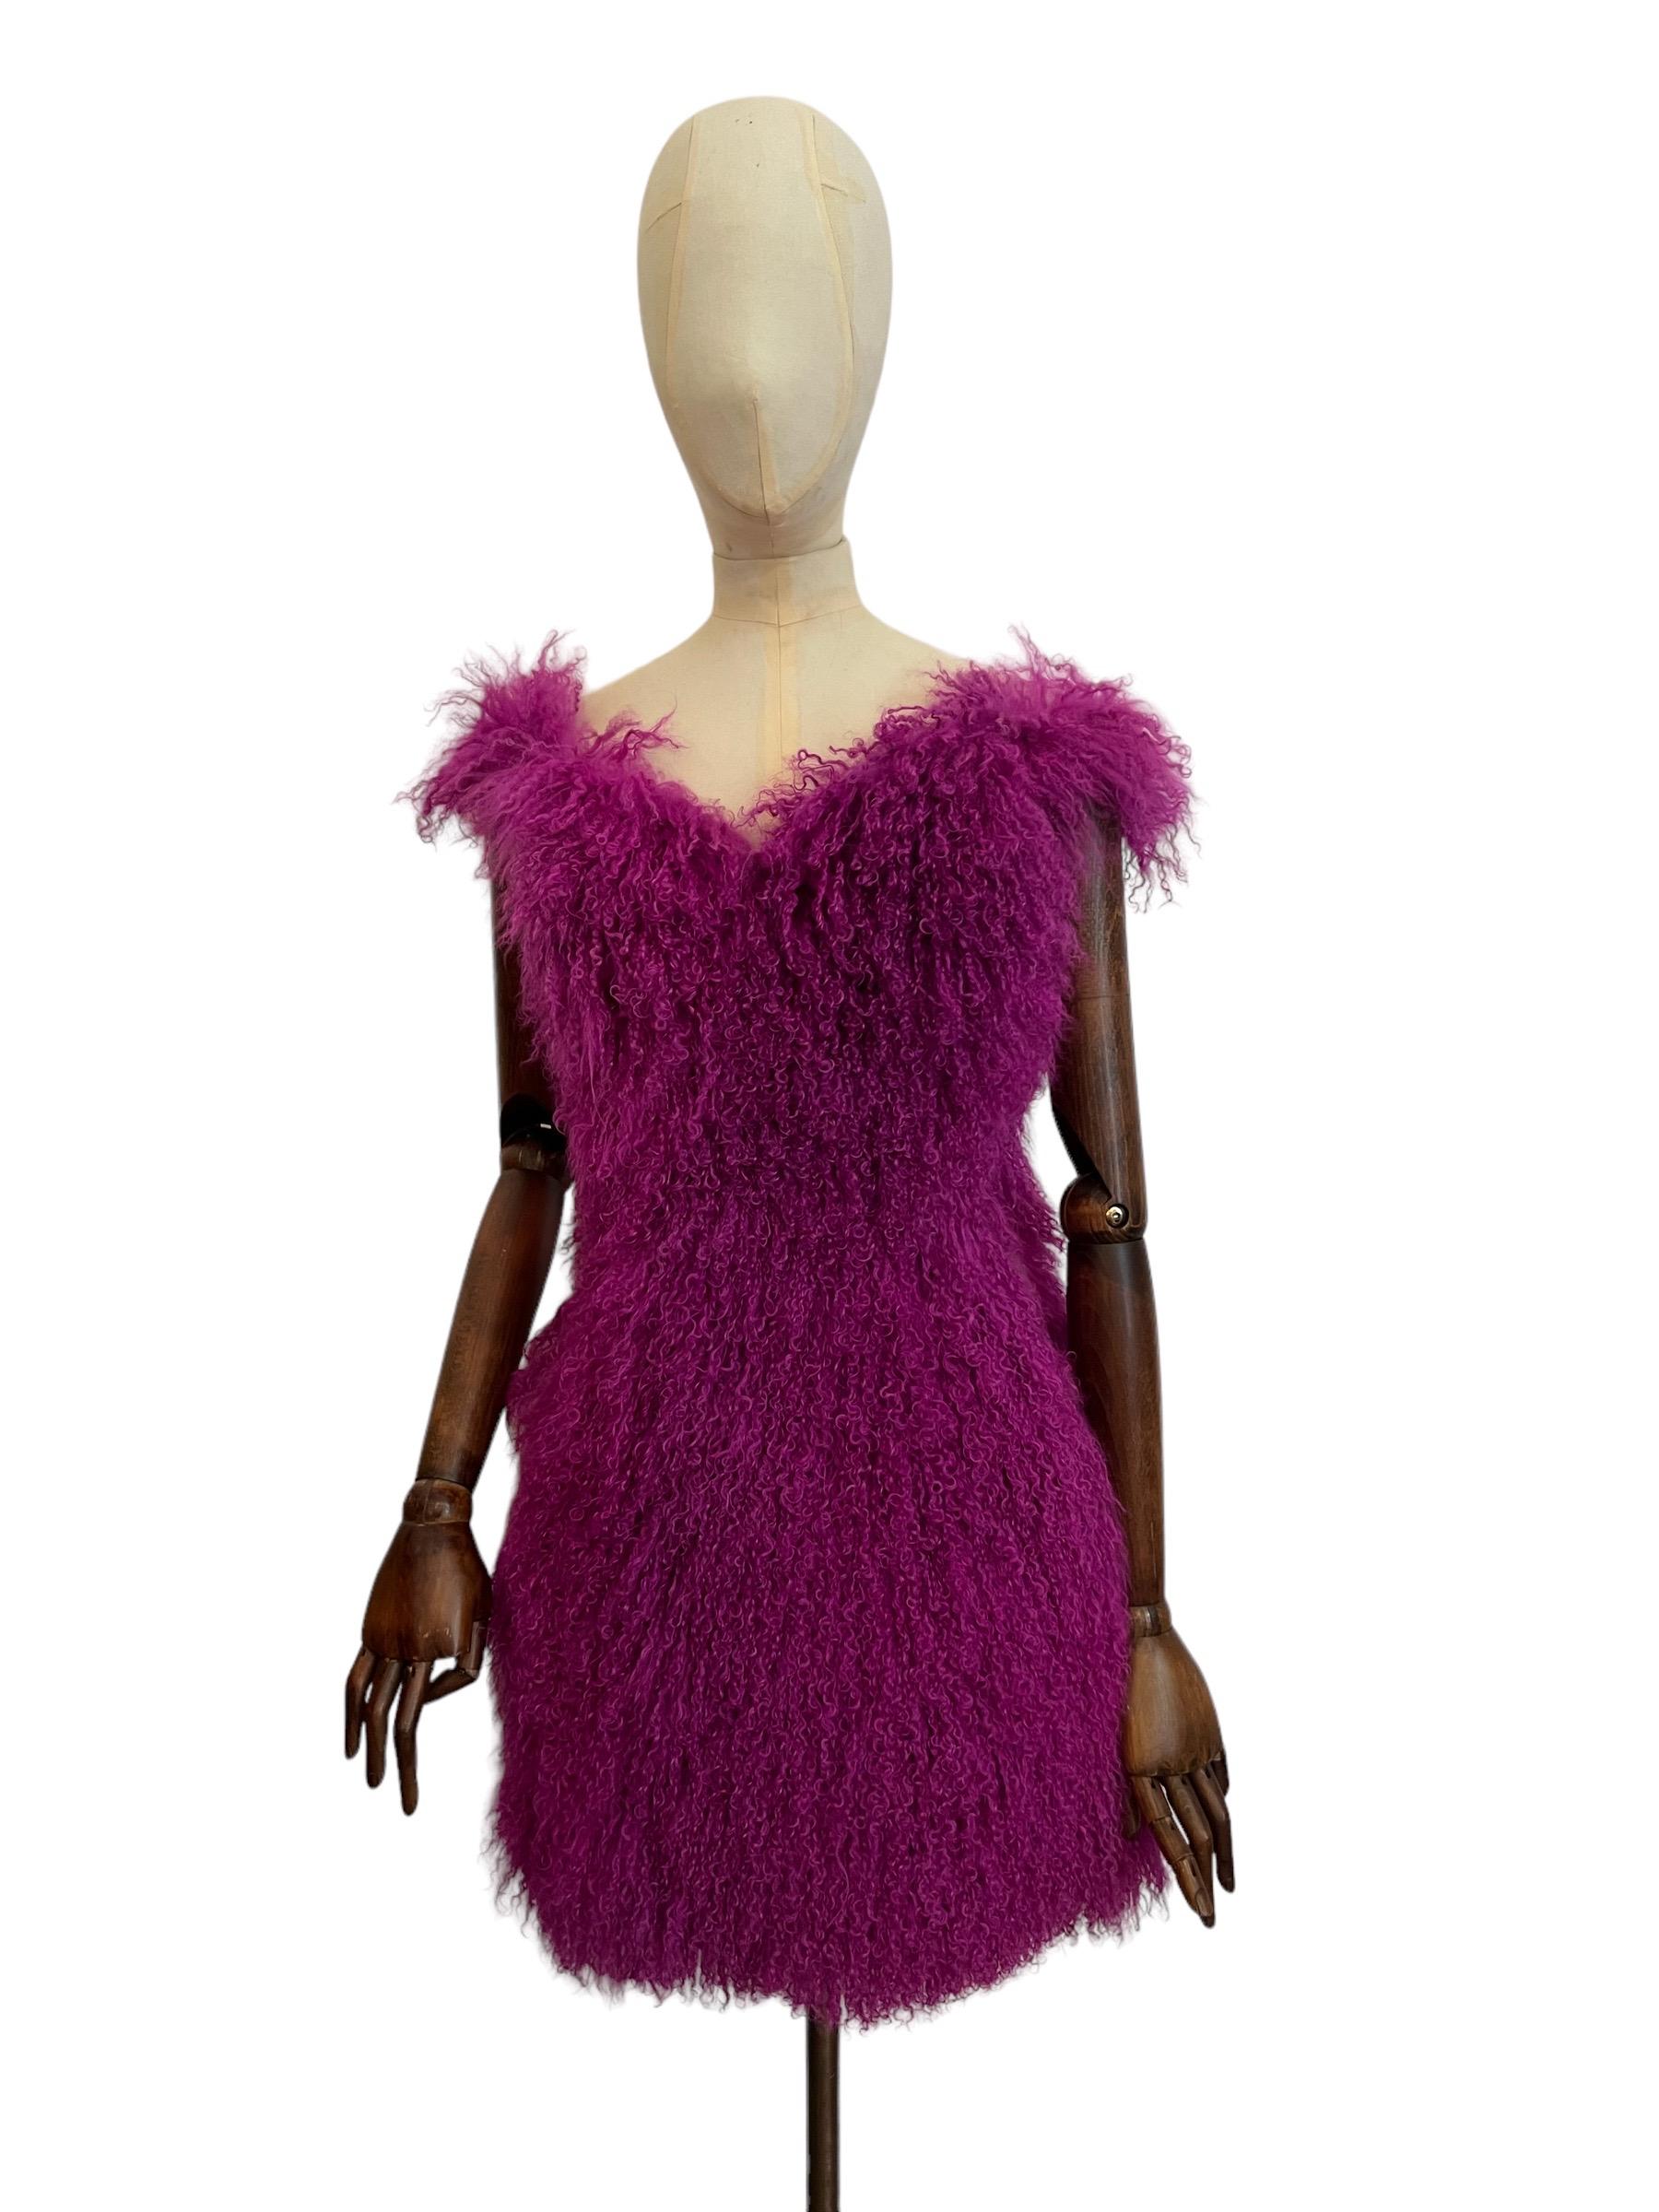 Outrageous VERSUS Versace 2012 Runway Magenta Purple Mongolian Lamb Fur Dress For Sale 6